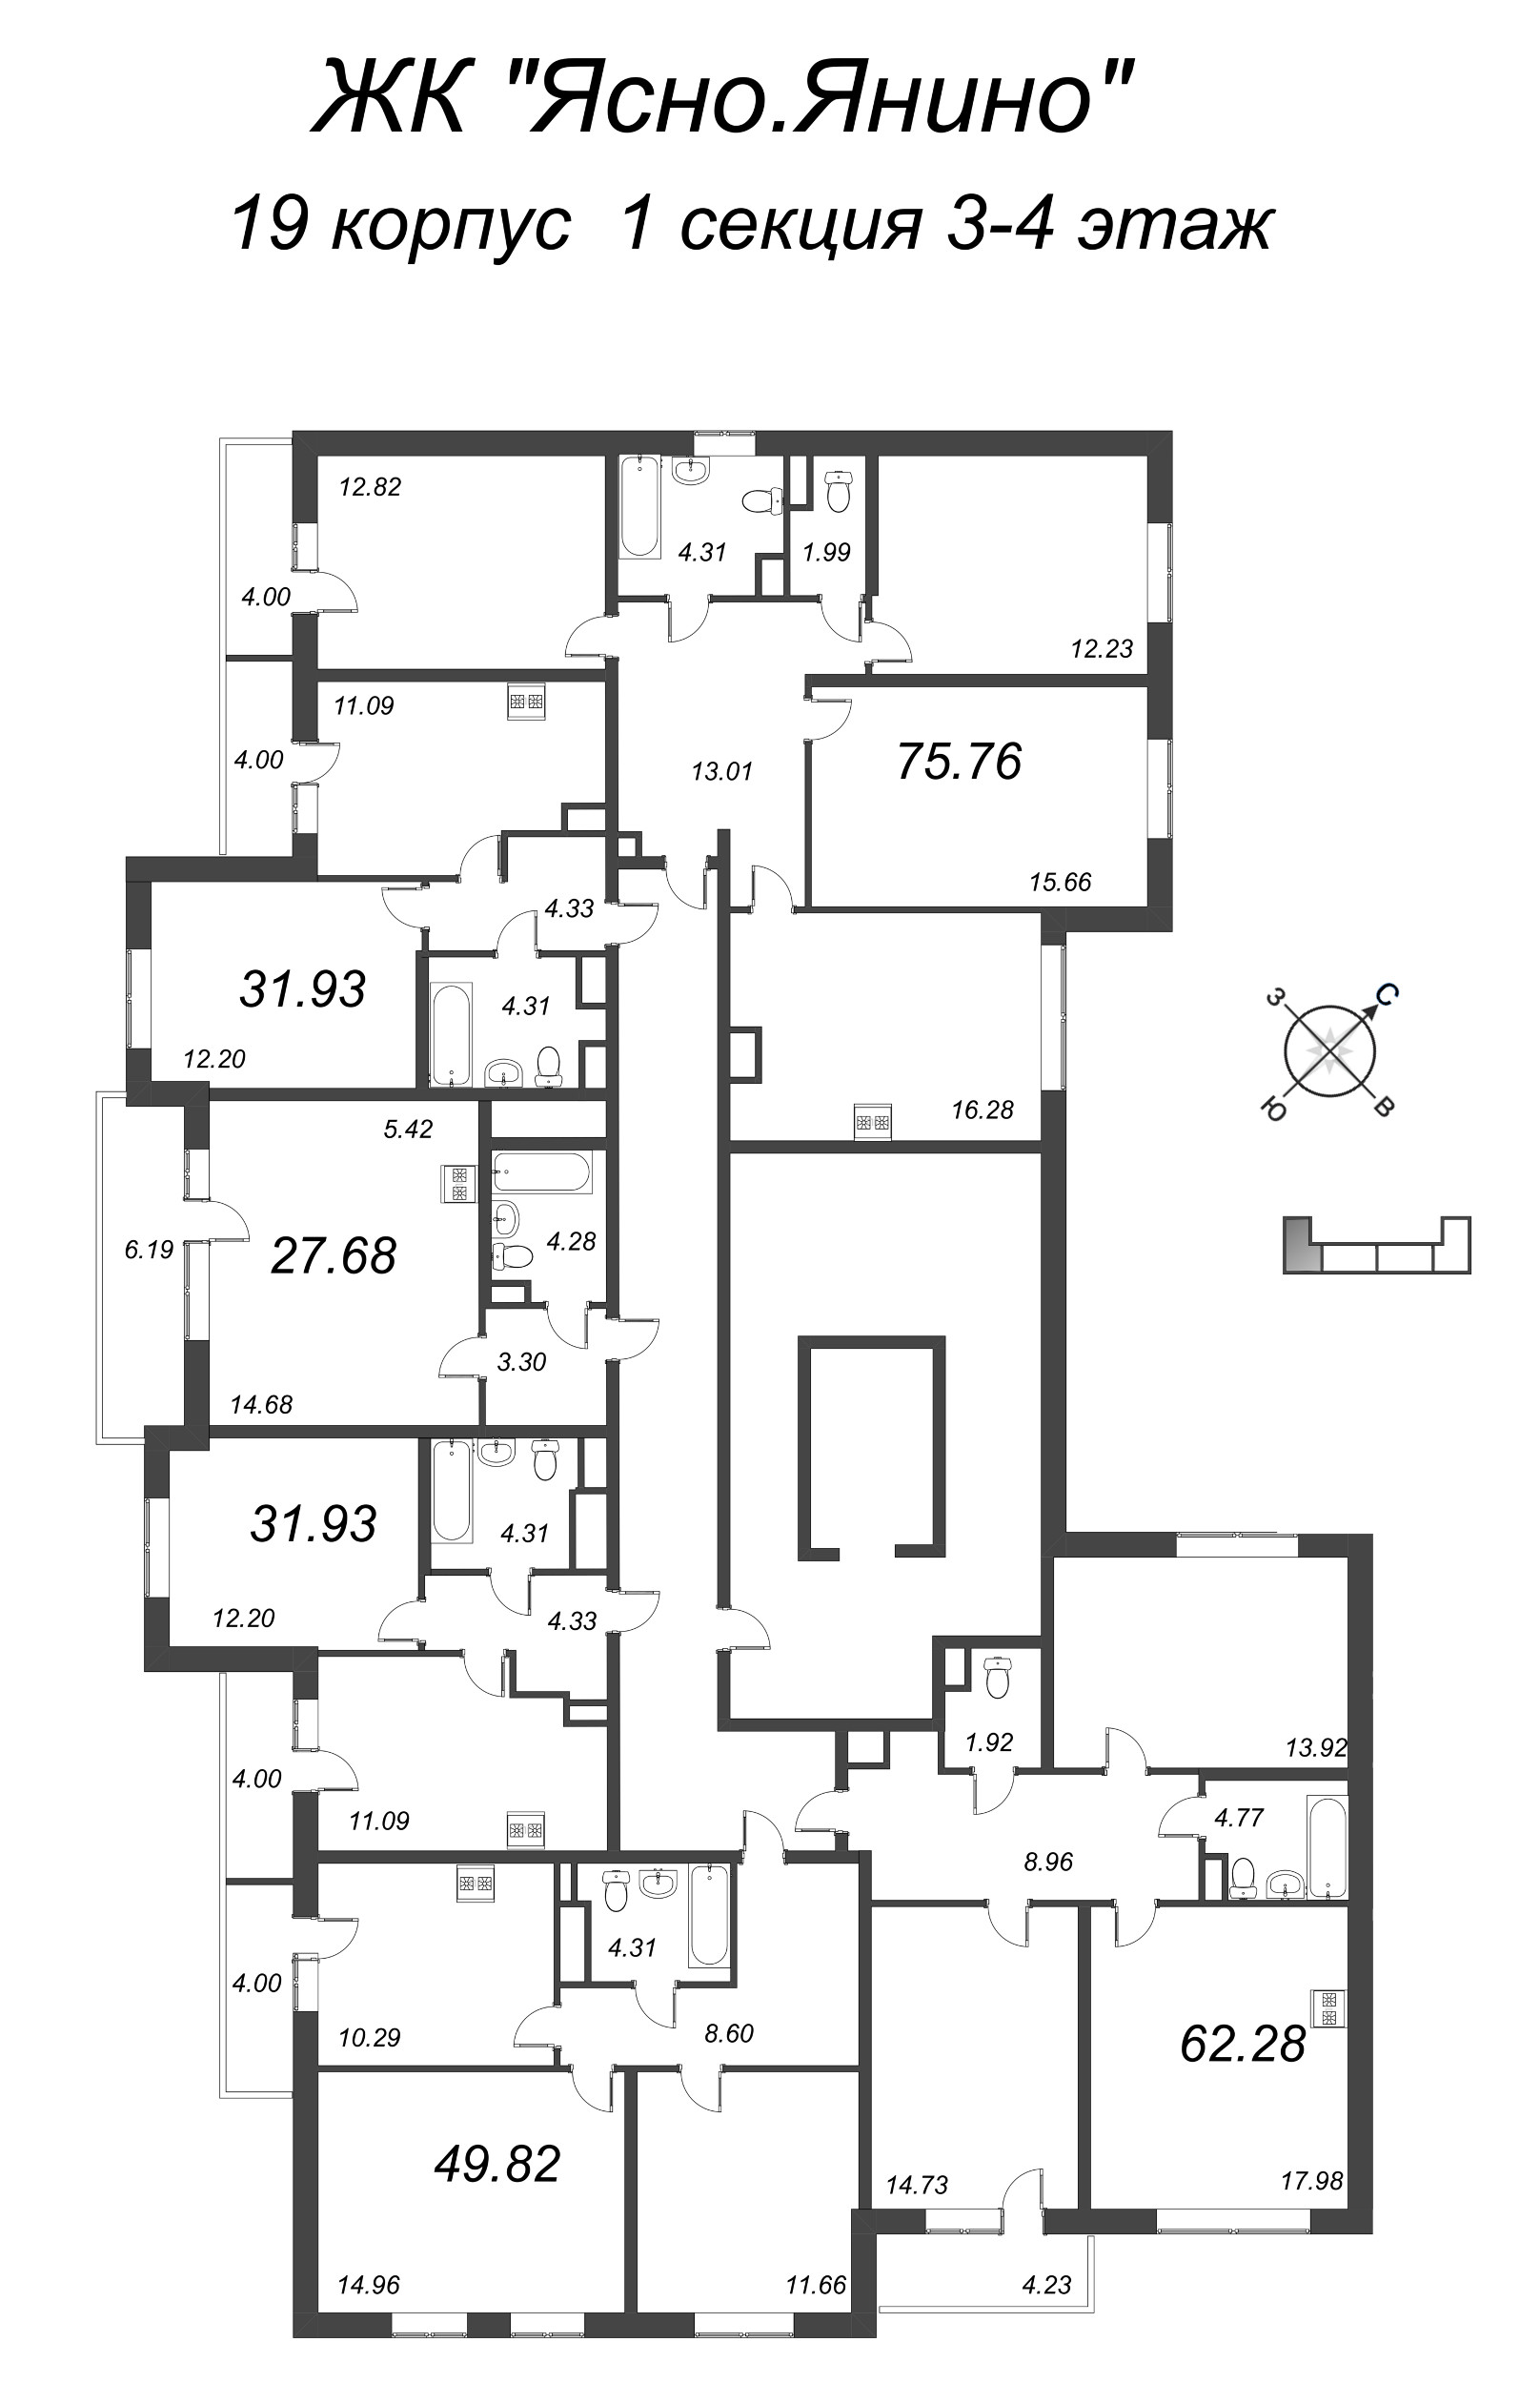 2-комнатная квартира, 49.82 м² в ЖК "Ясно.Янино" - планировка этажа